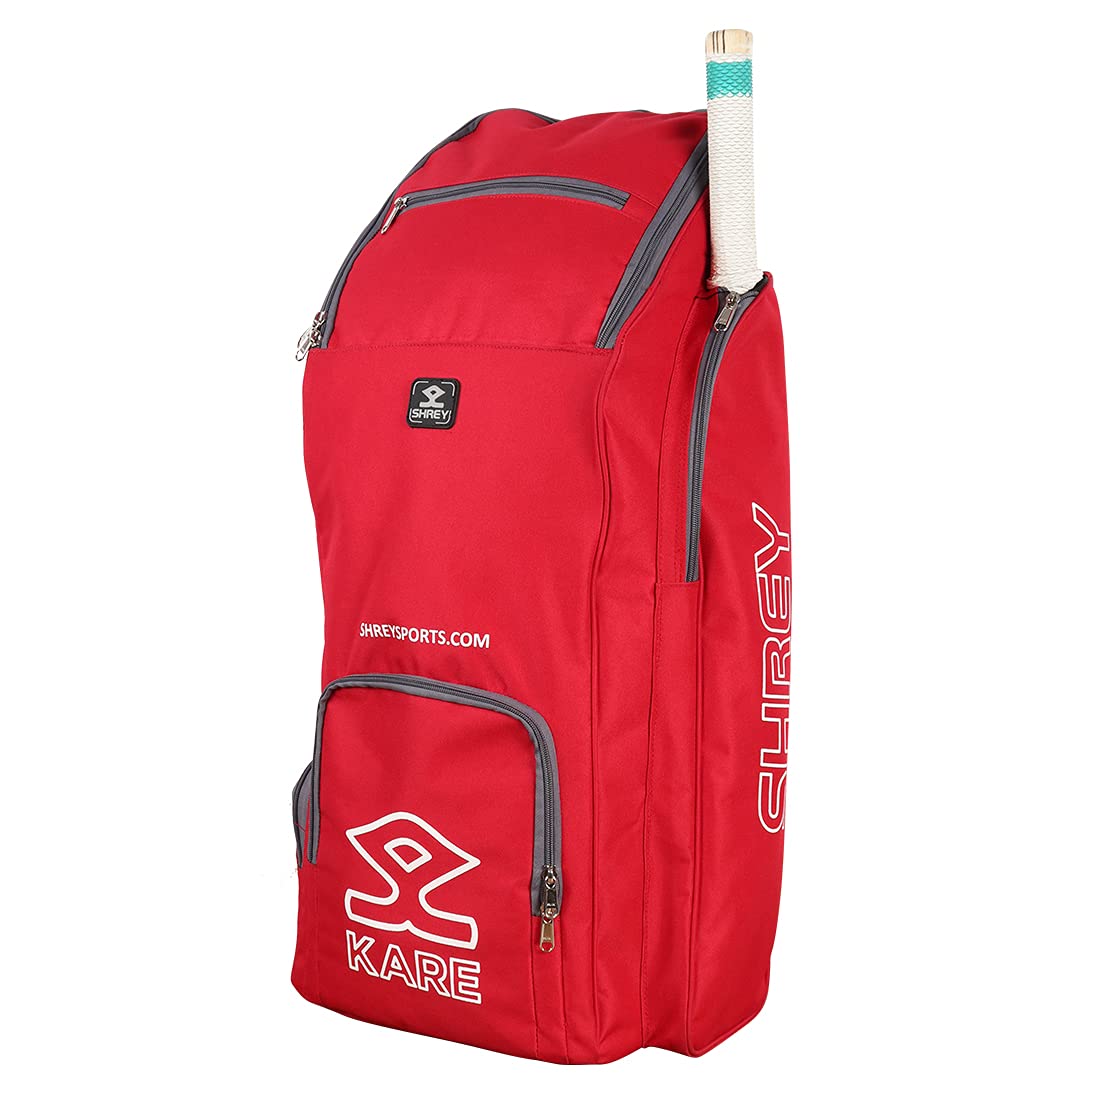 Shrey Kare Duffle Cricket Kitbag - Red - Best Price online Prokicksports.com